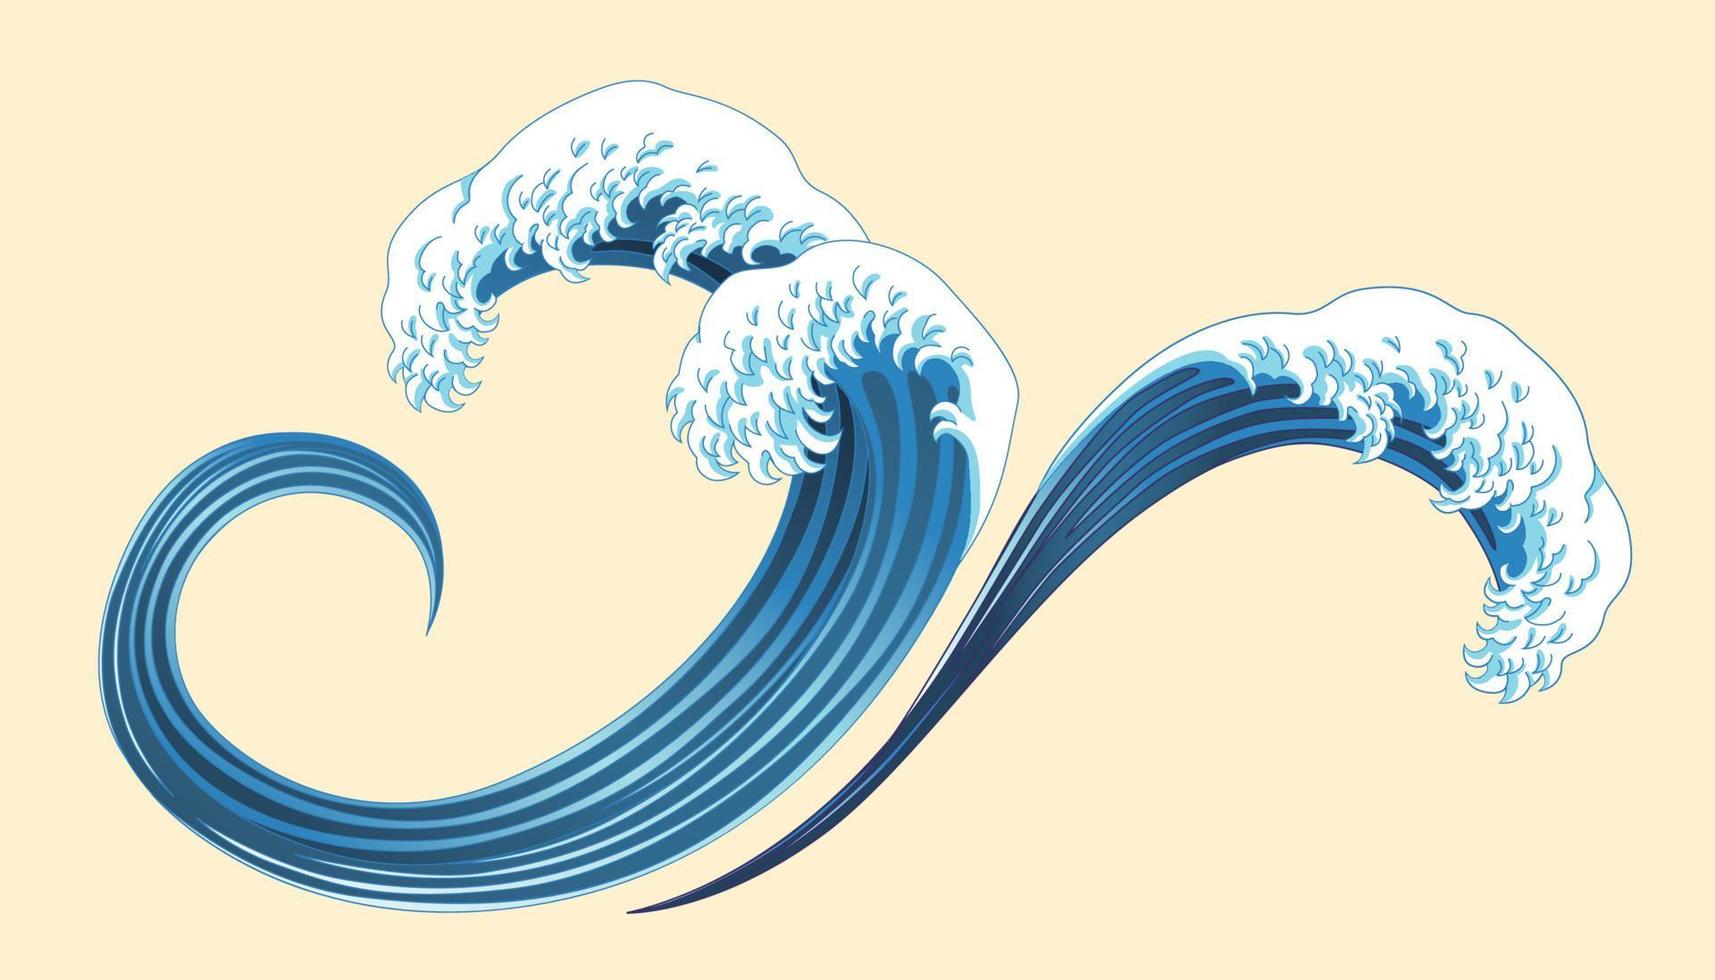 Ukiyo-e style splashing wave elements on light yellow background vector